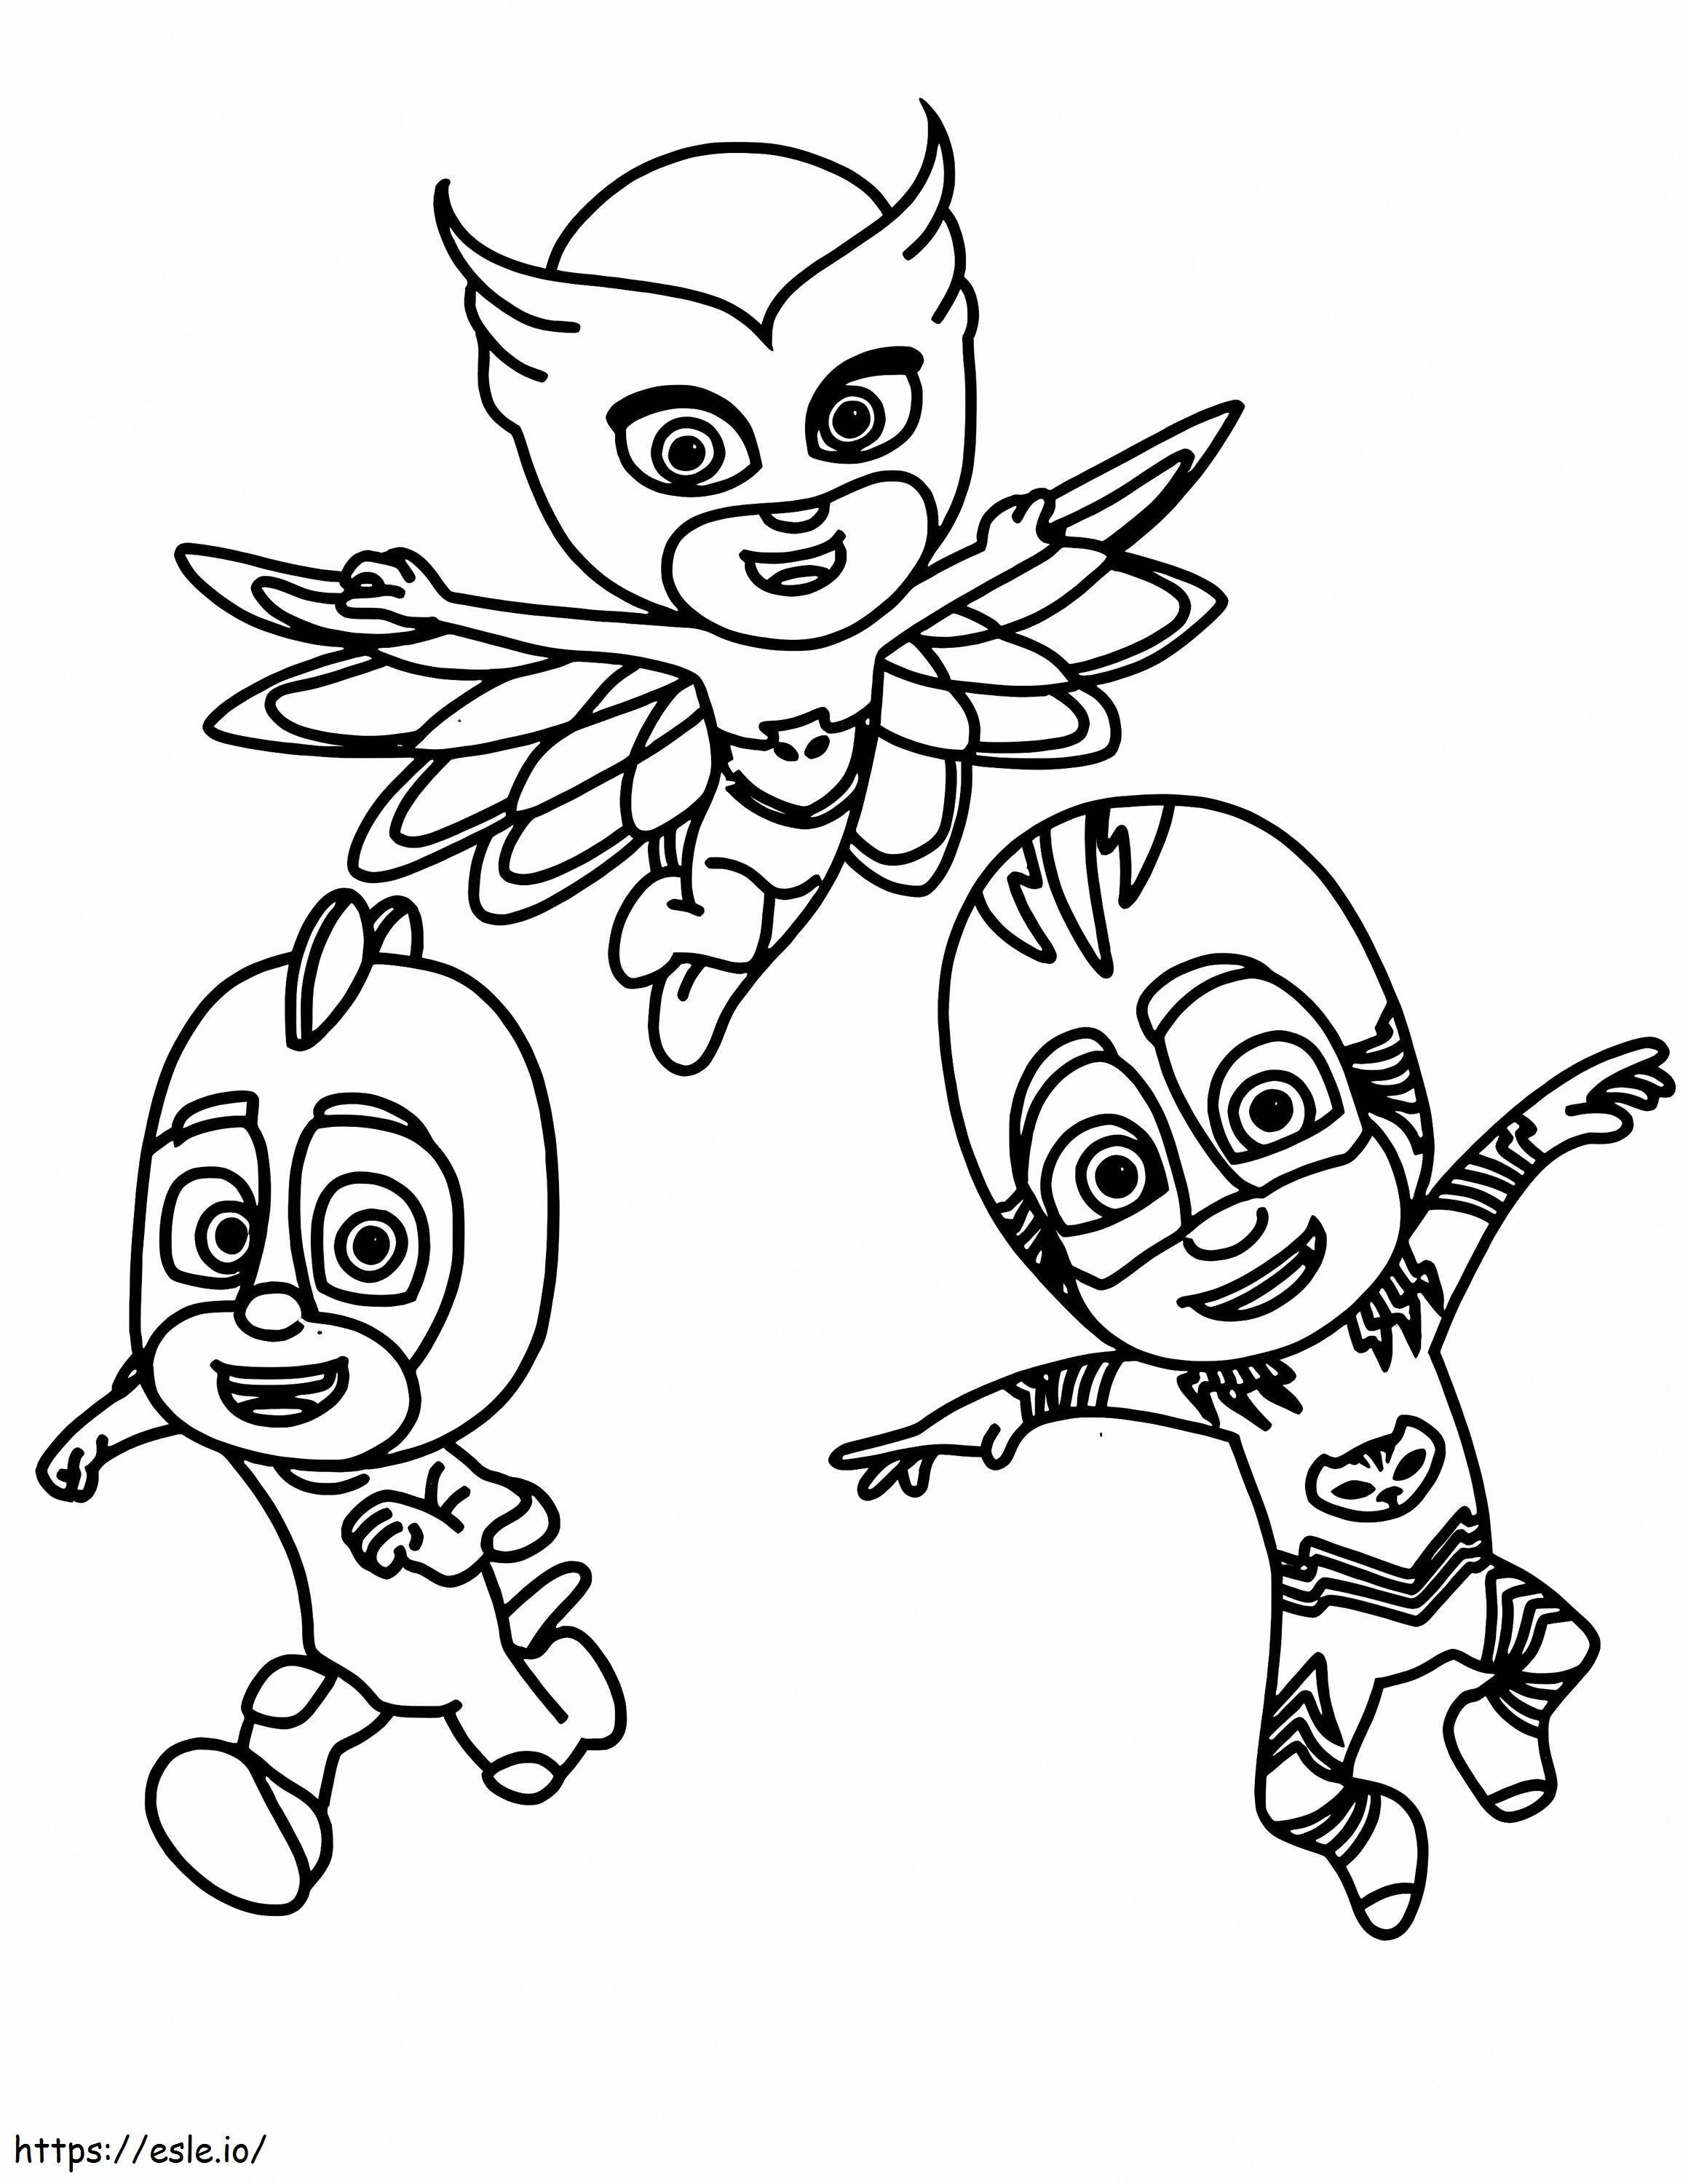 PJ Masks 9 coloring page